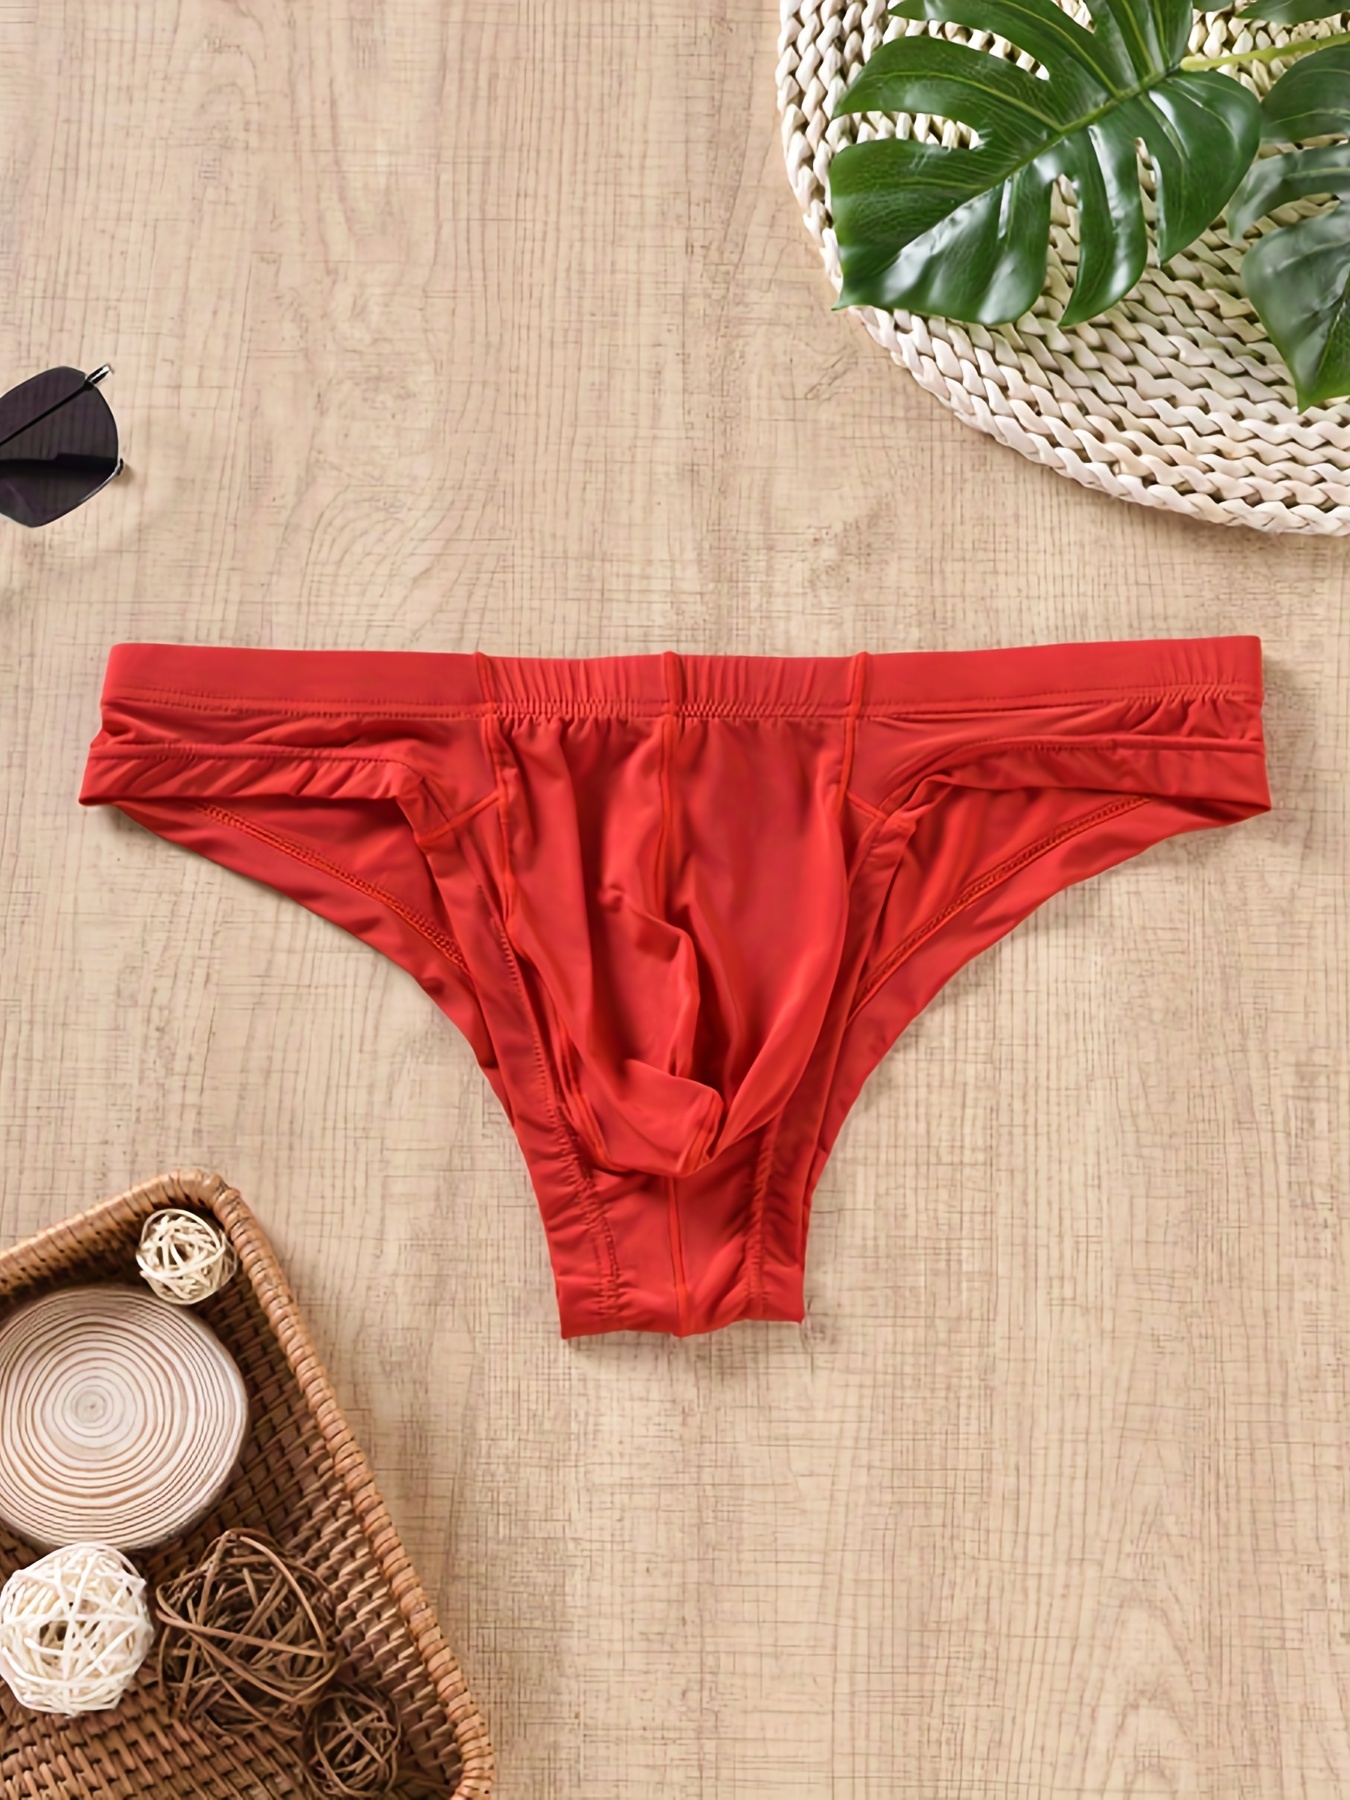 Men's Trendy Underwear Stylish Low-Rise Skimpy Briefs Comfort